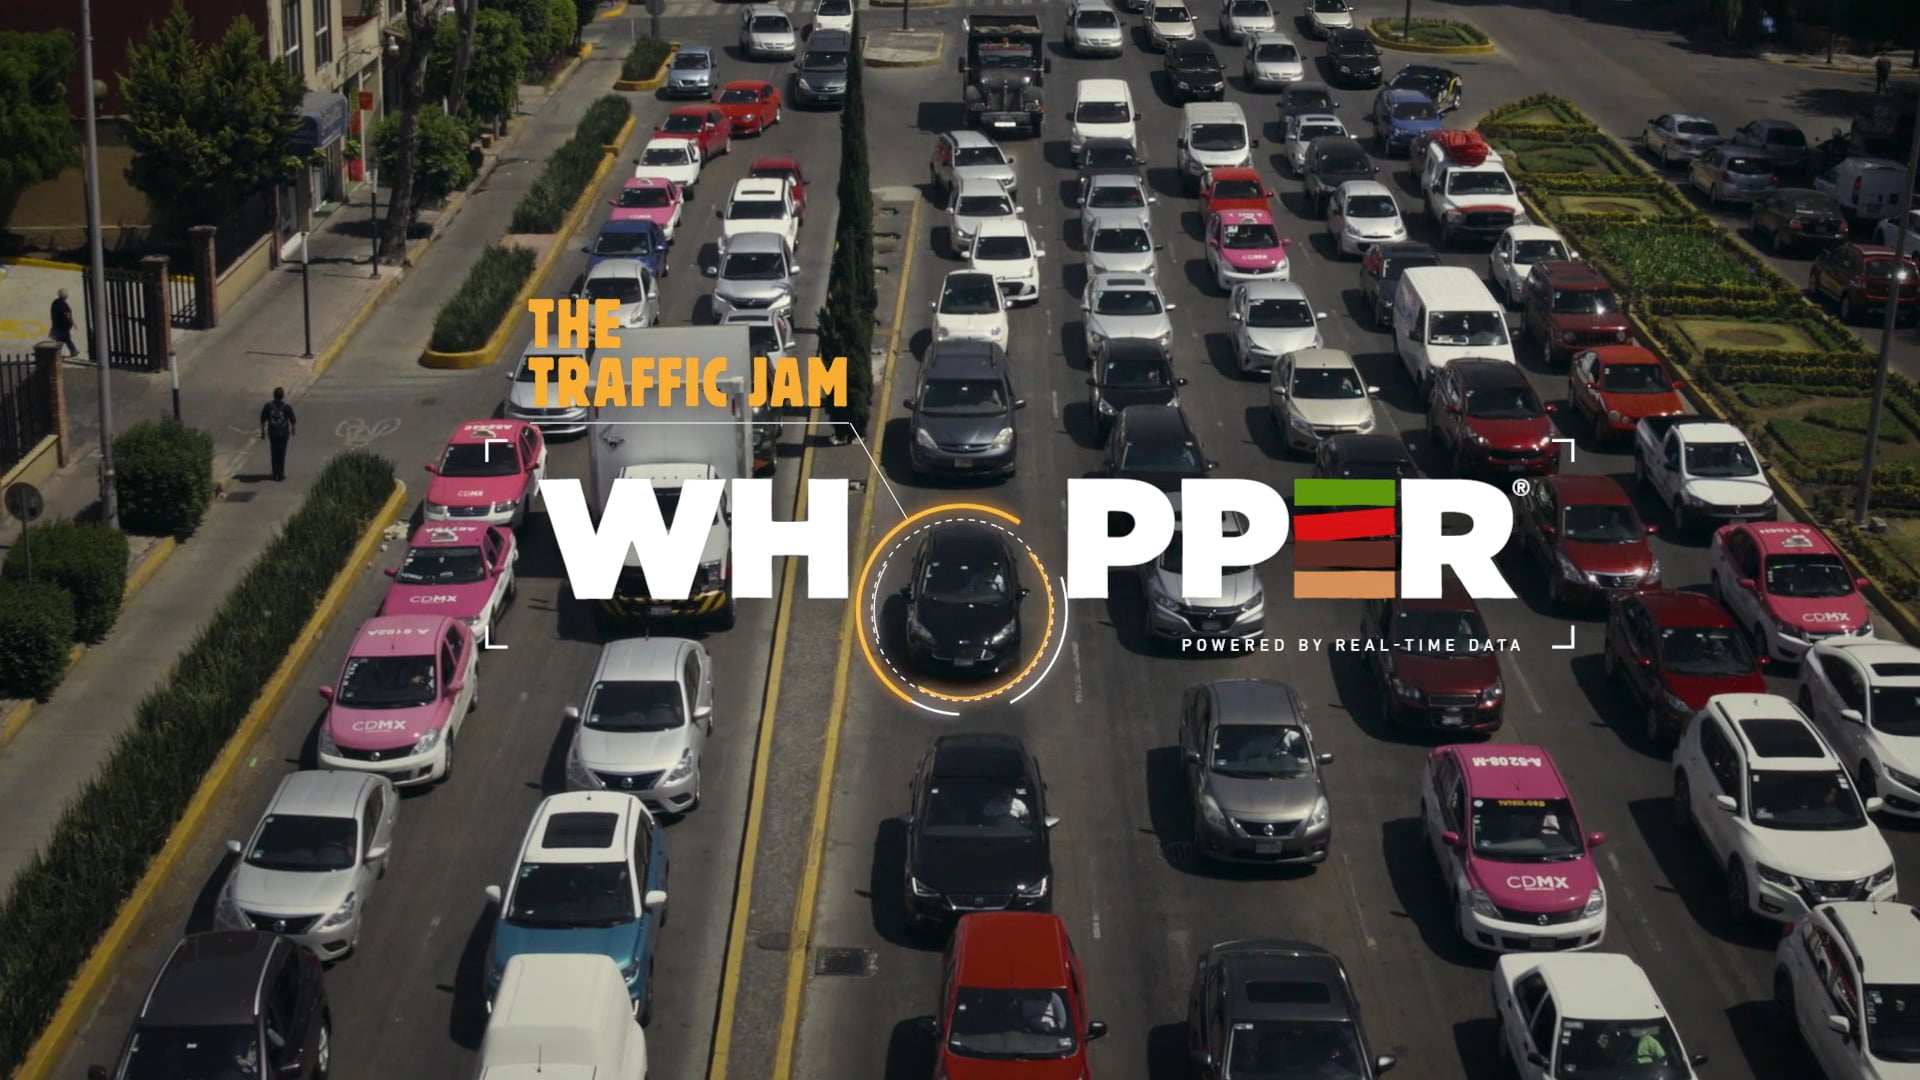 The Traffic Jam Whooper | Burger King